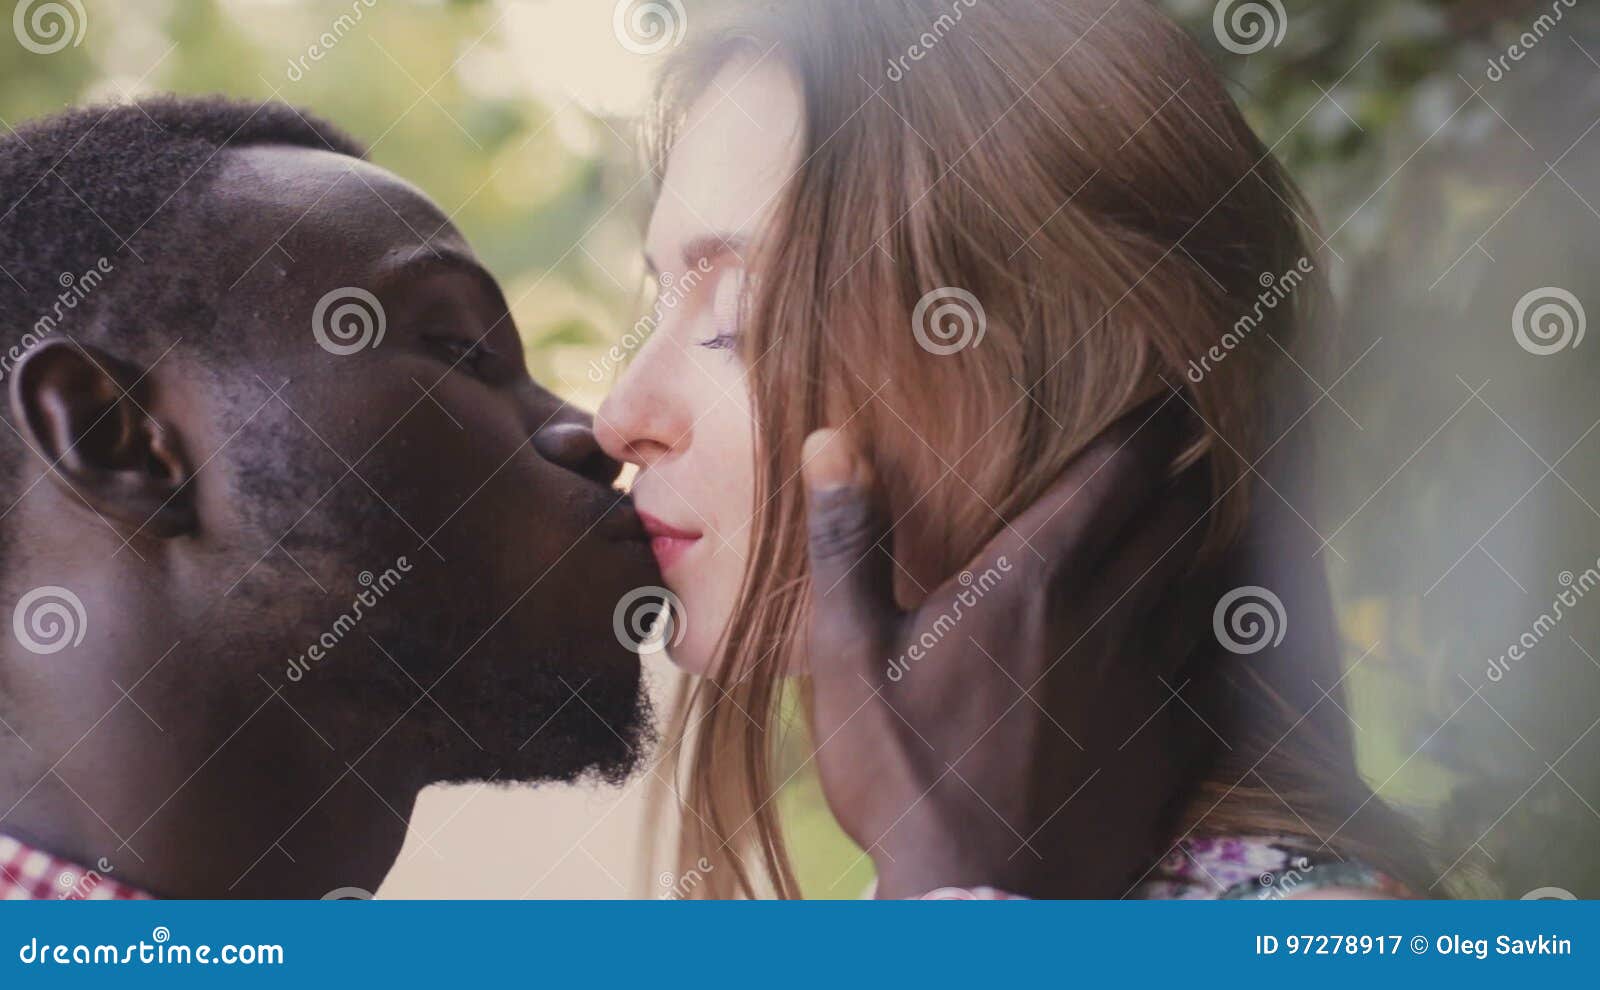 white wife kissing black lovers